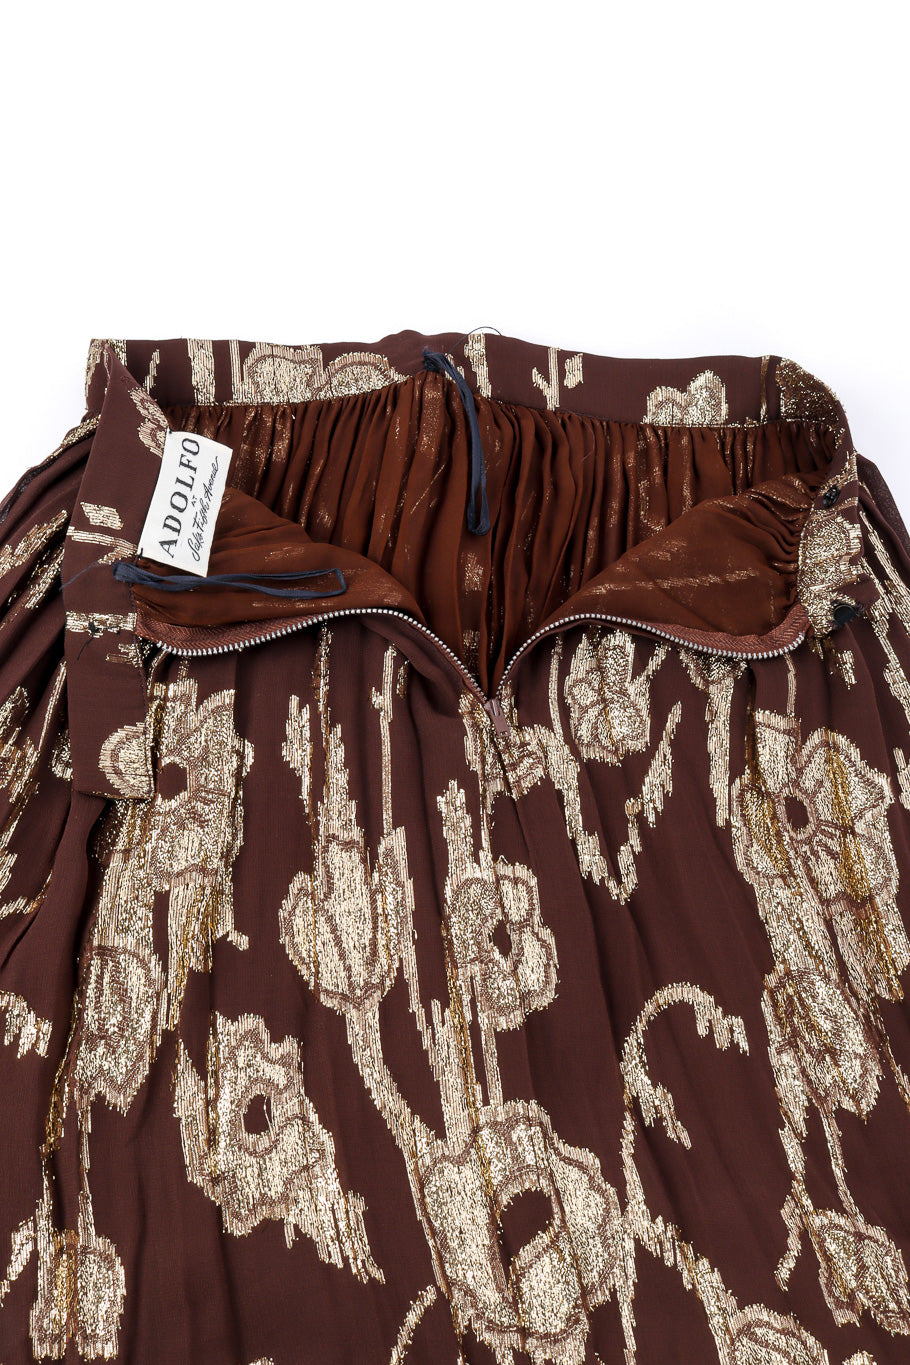 Vintage Adolfo Metallic Top and Skirt Set skirt unzipped closeup @recessla